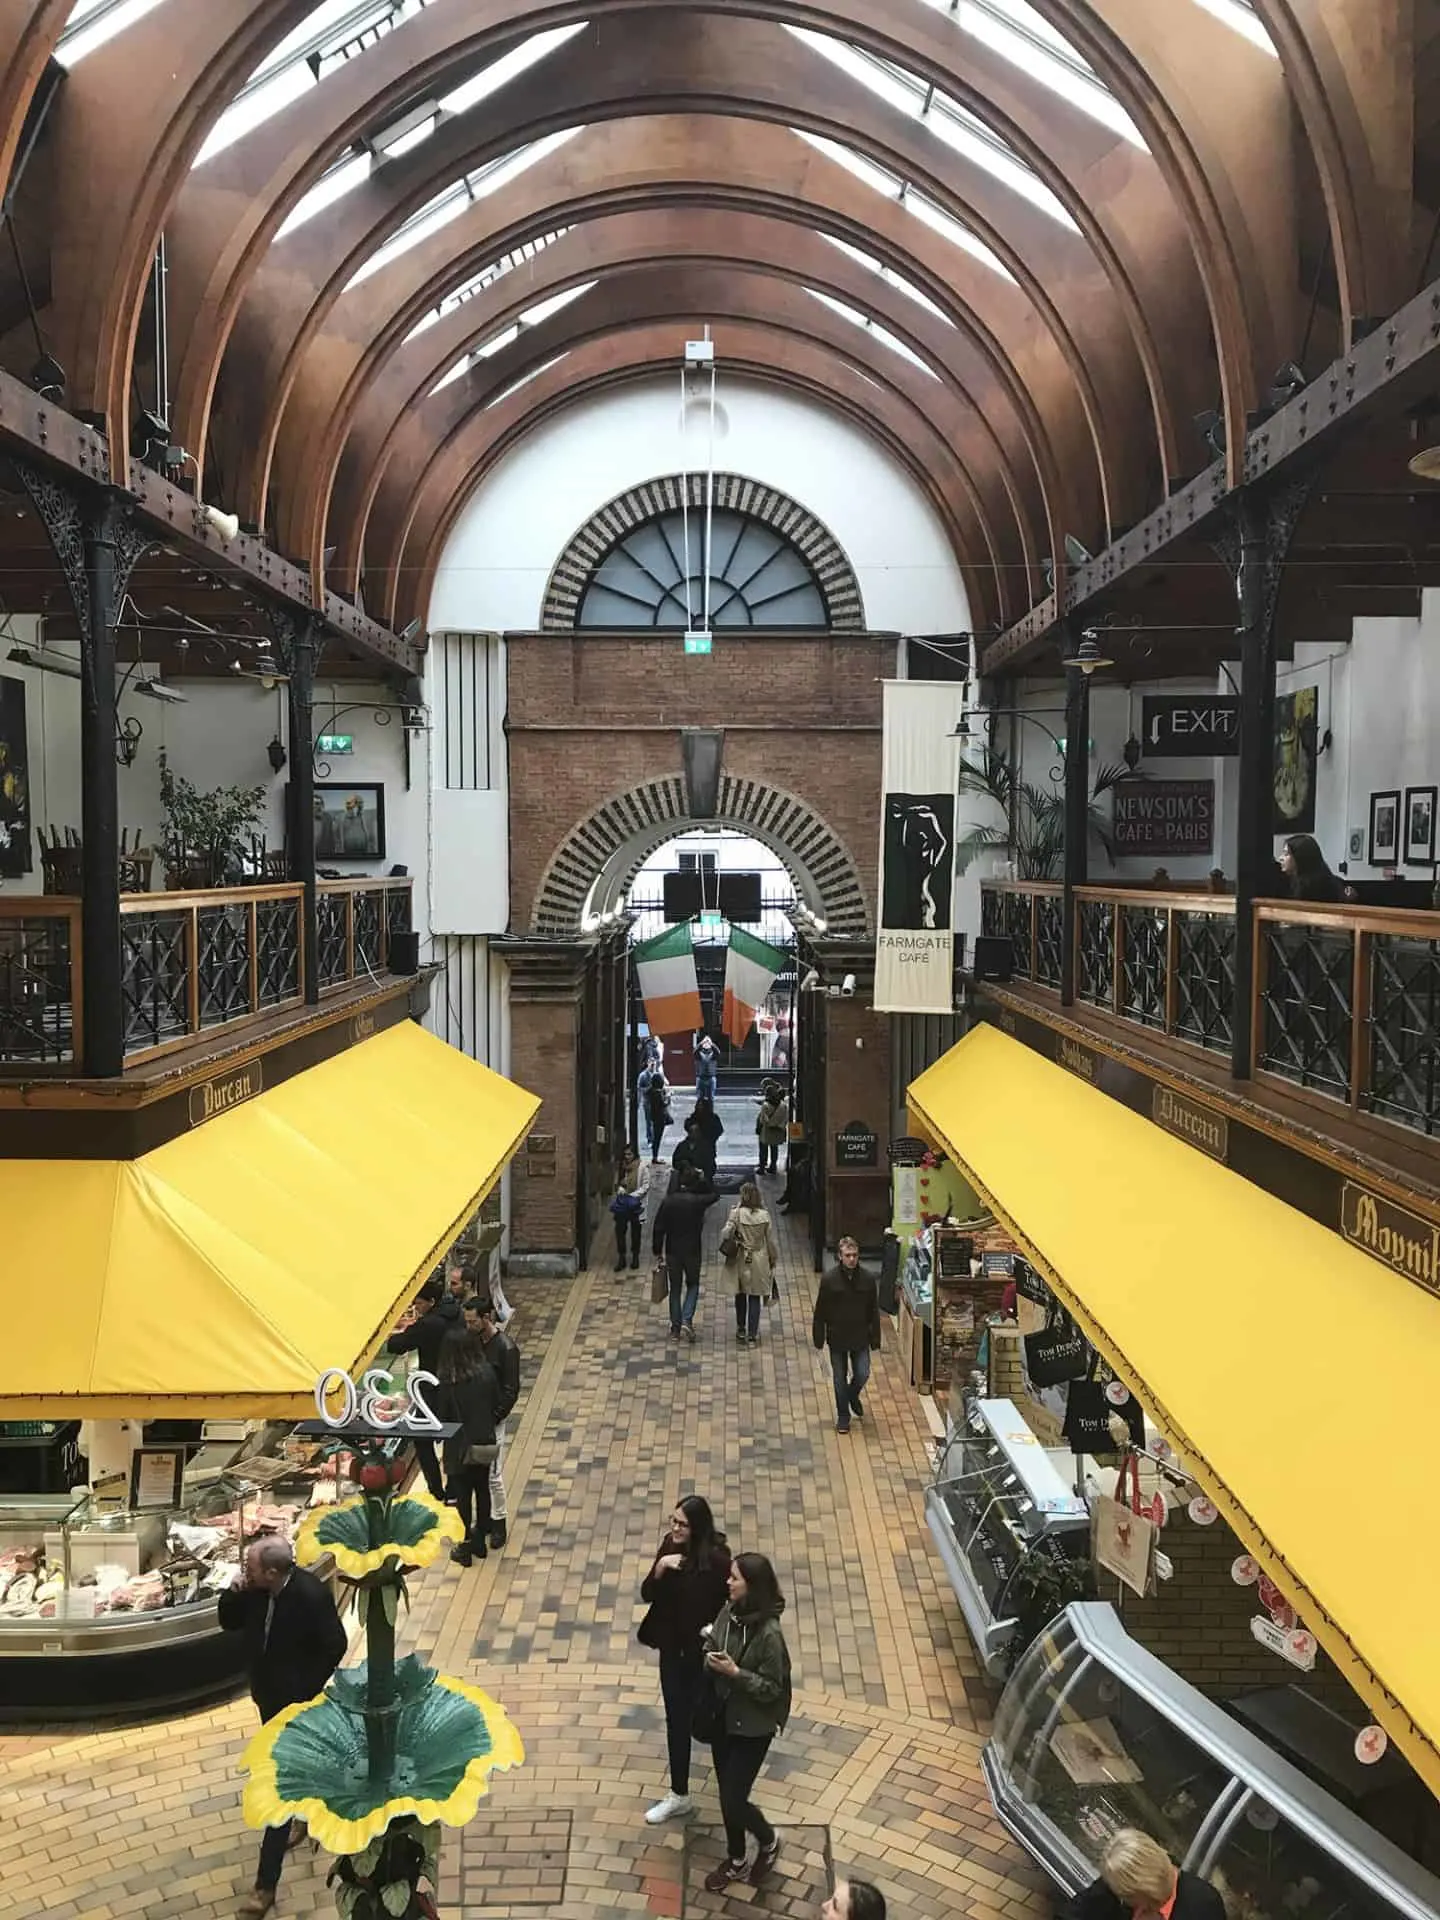 The English Market in Cork, Ireland